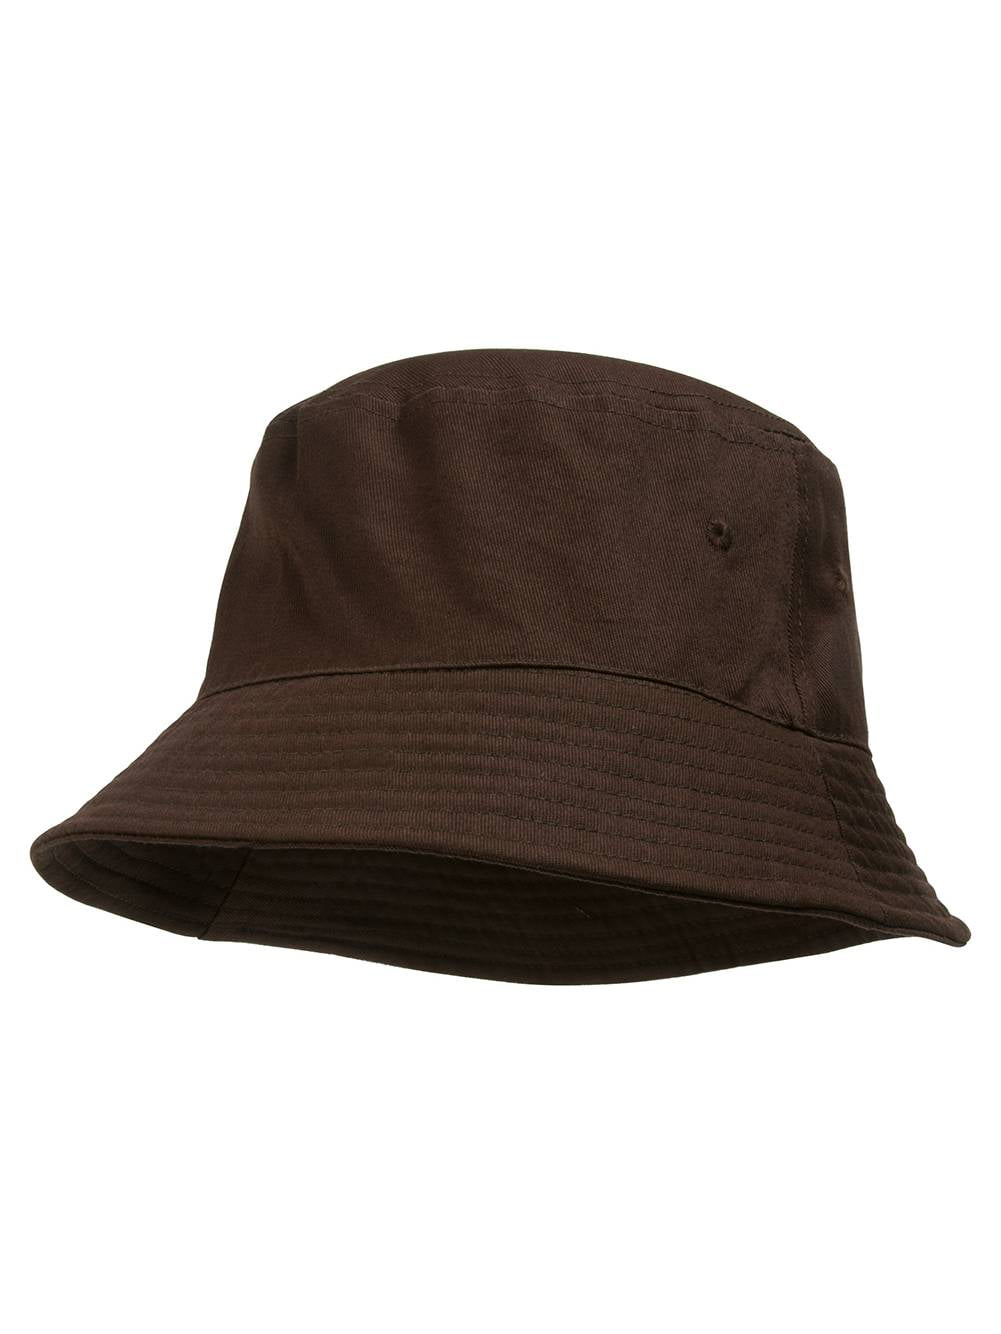 TopHeadwear Blank Cotton Bucket Hat - Brown - Large/X-Large | Walmart ...